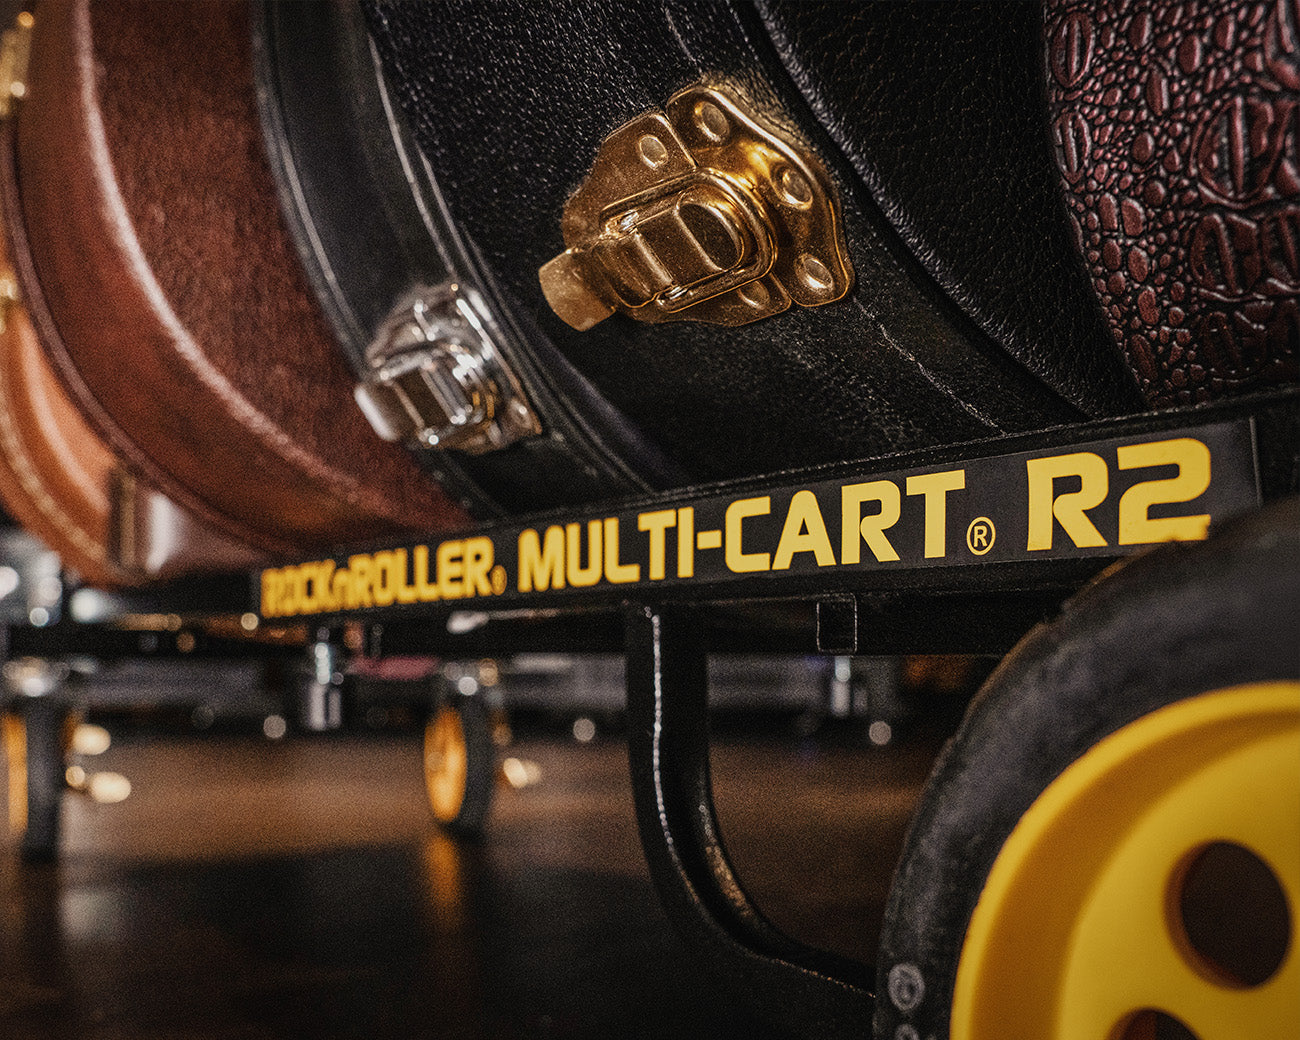 RockNRoller® Multi-Cart® R2RT "Micro"